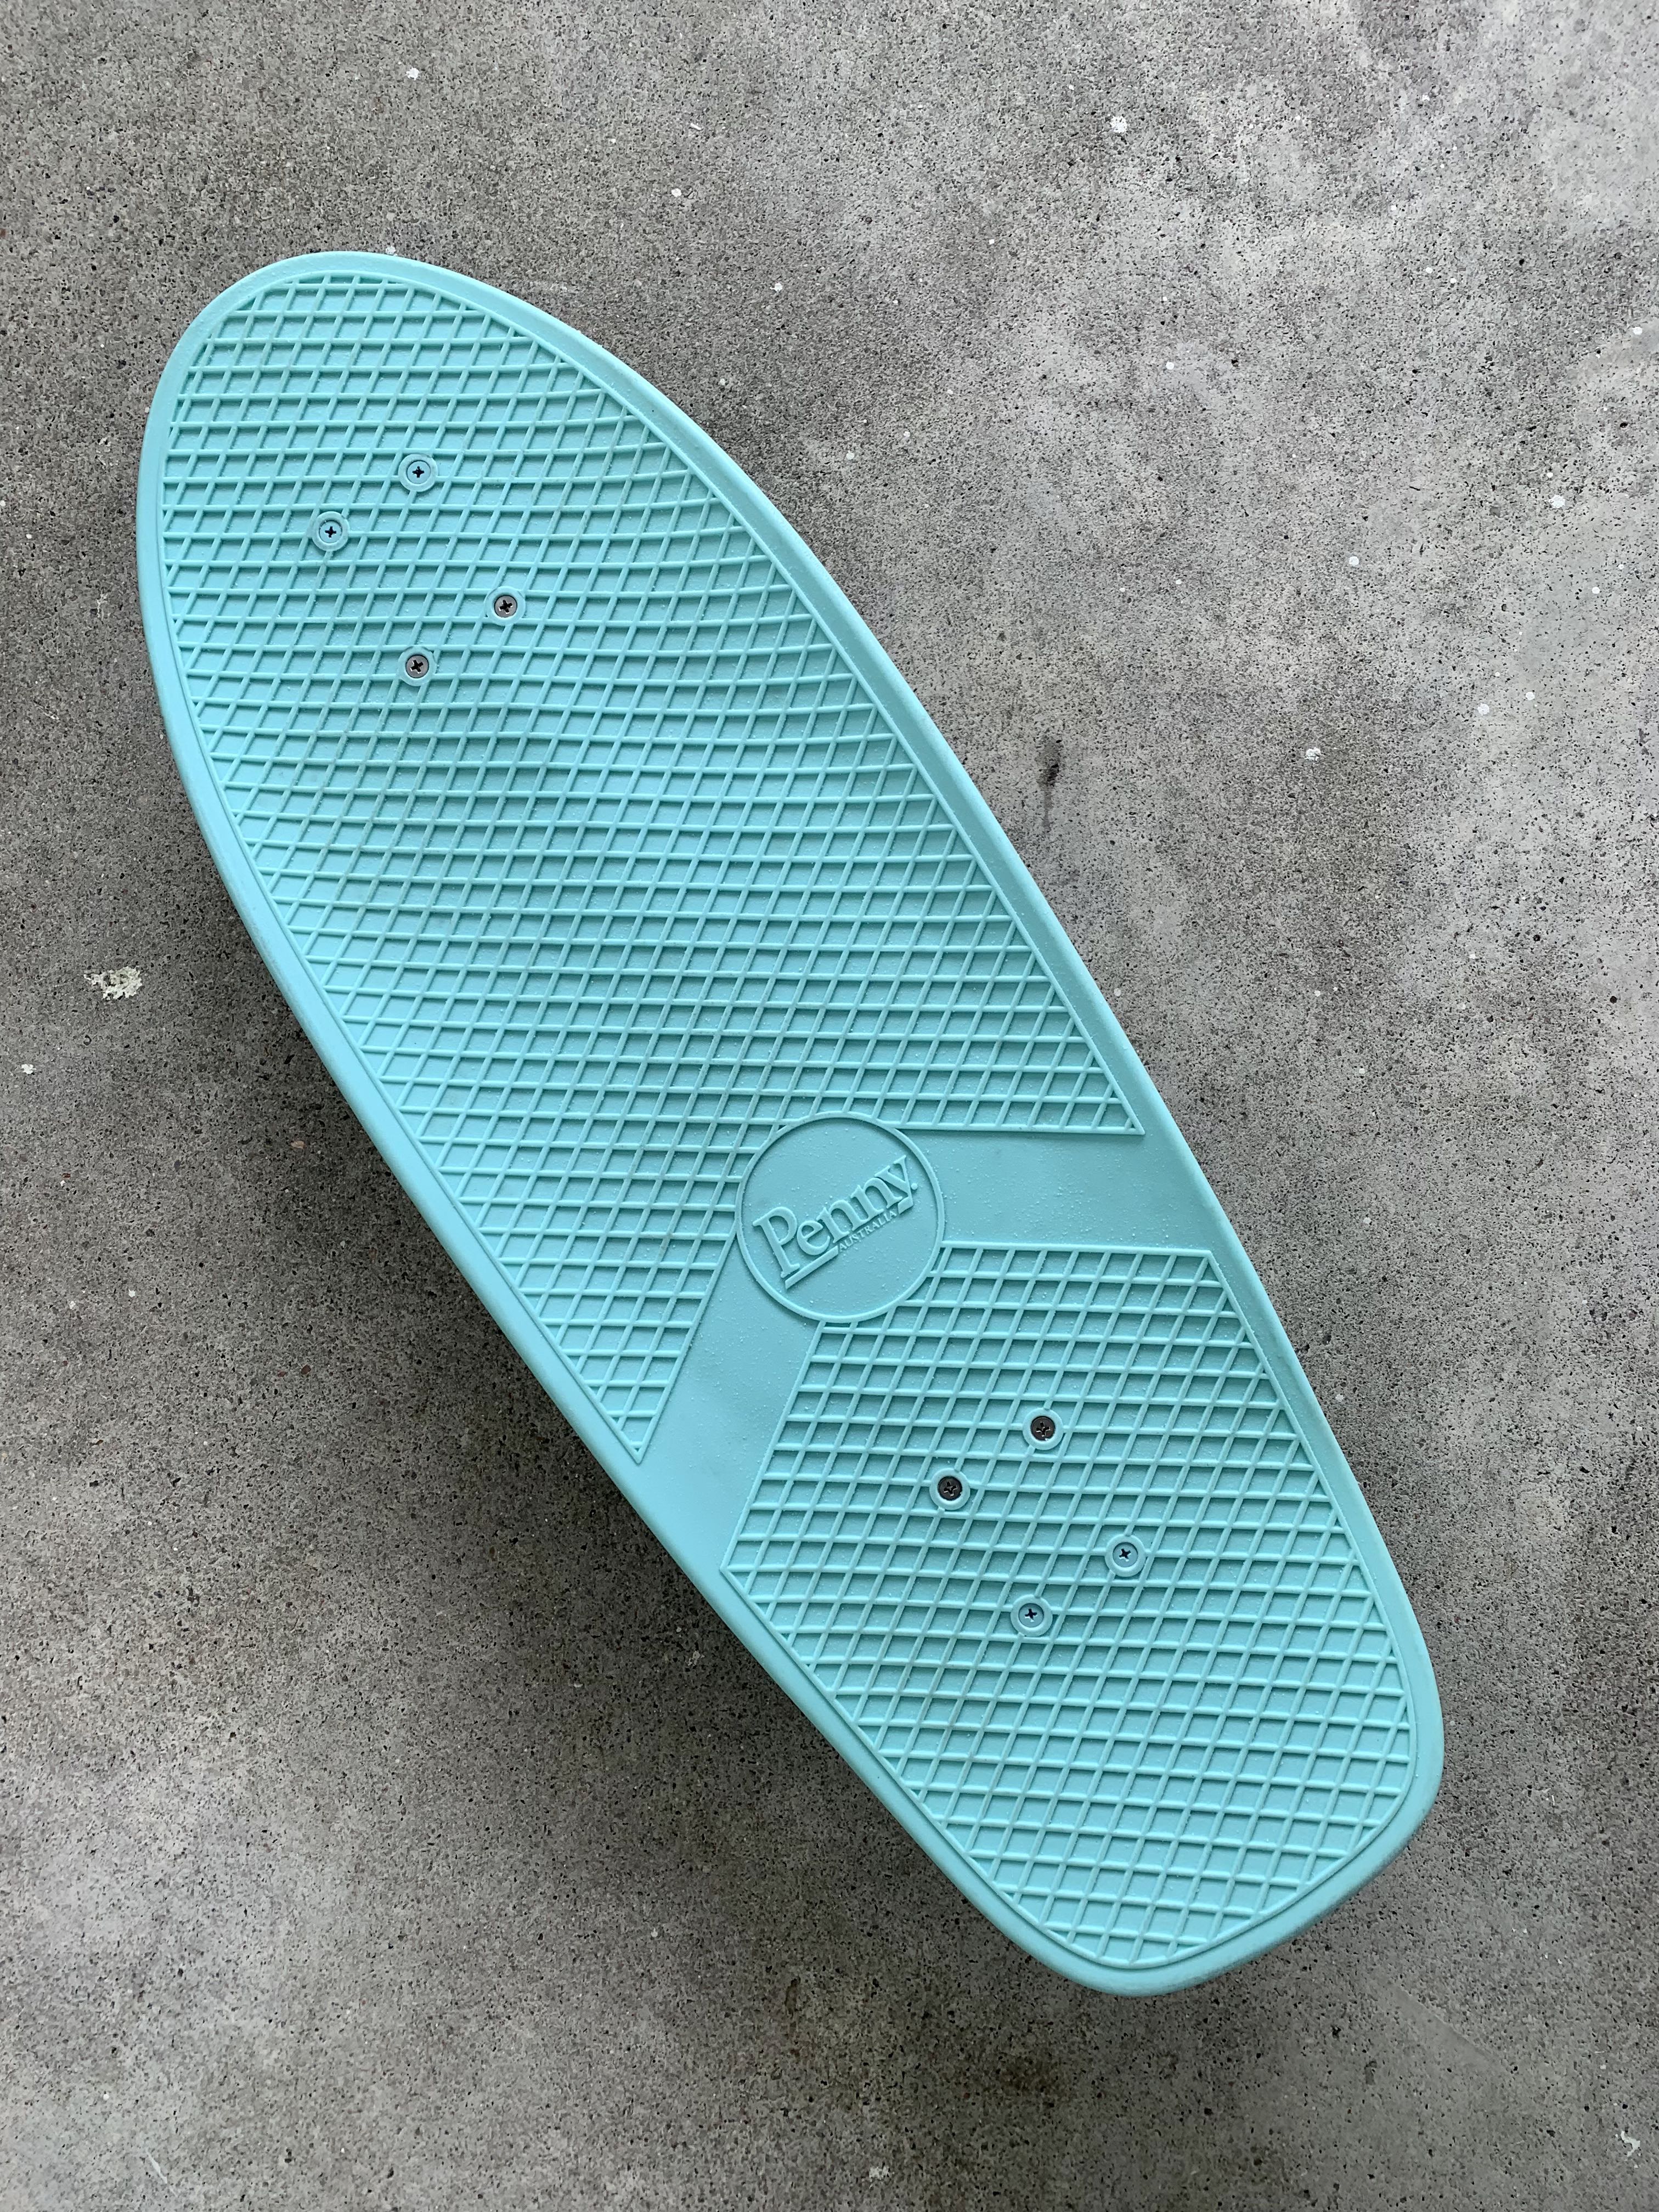 29 Surfskates – Penny Skateboards